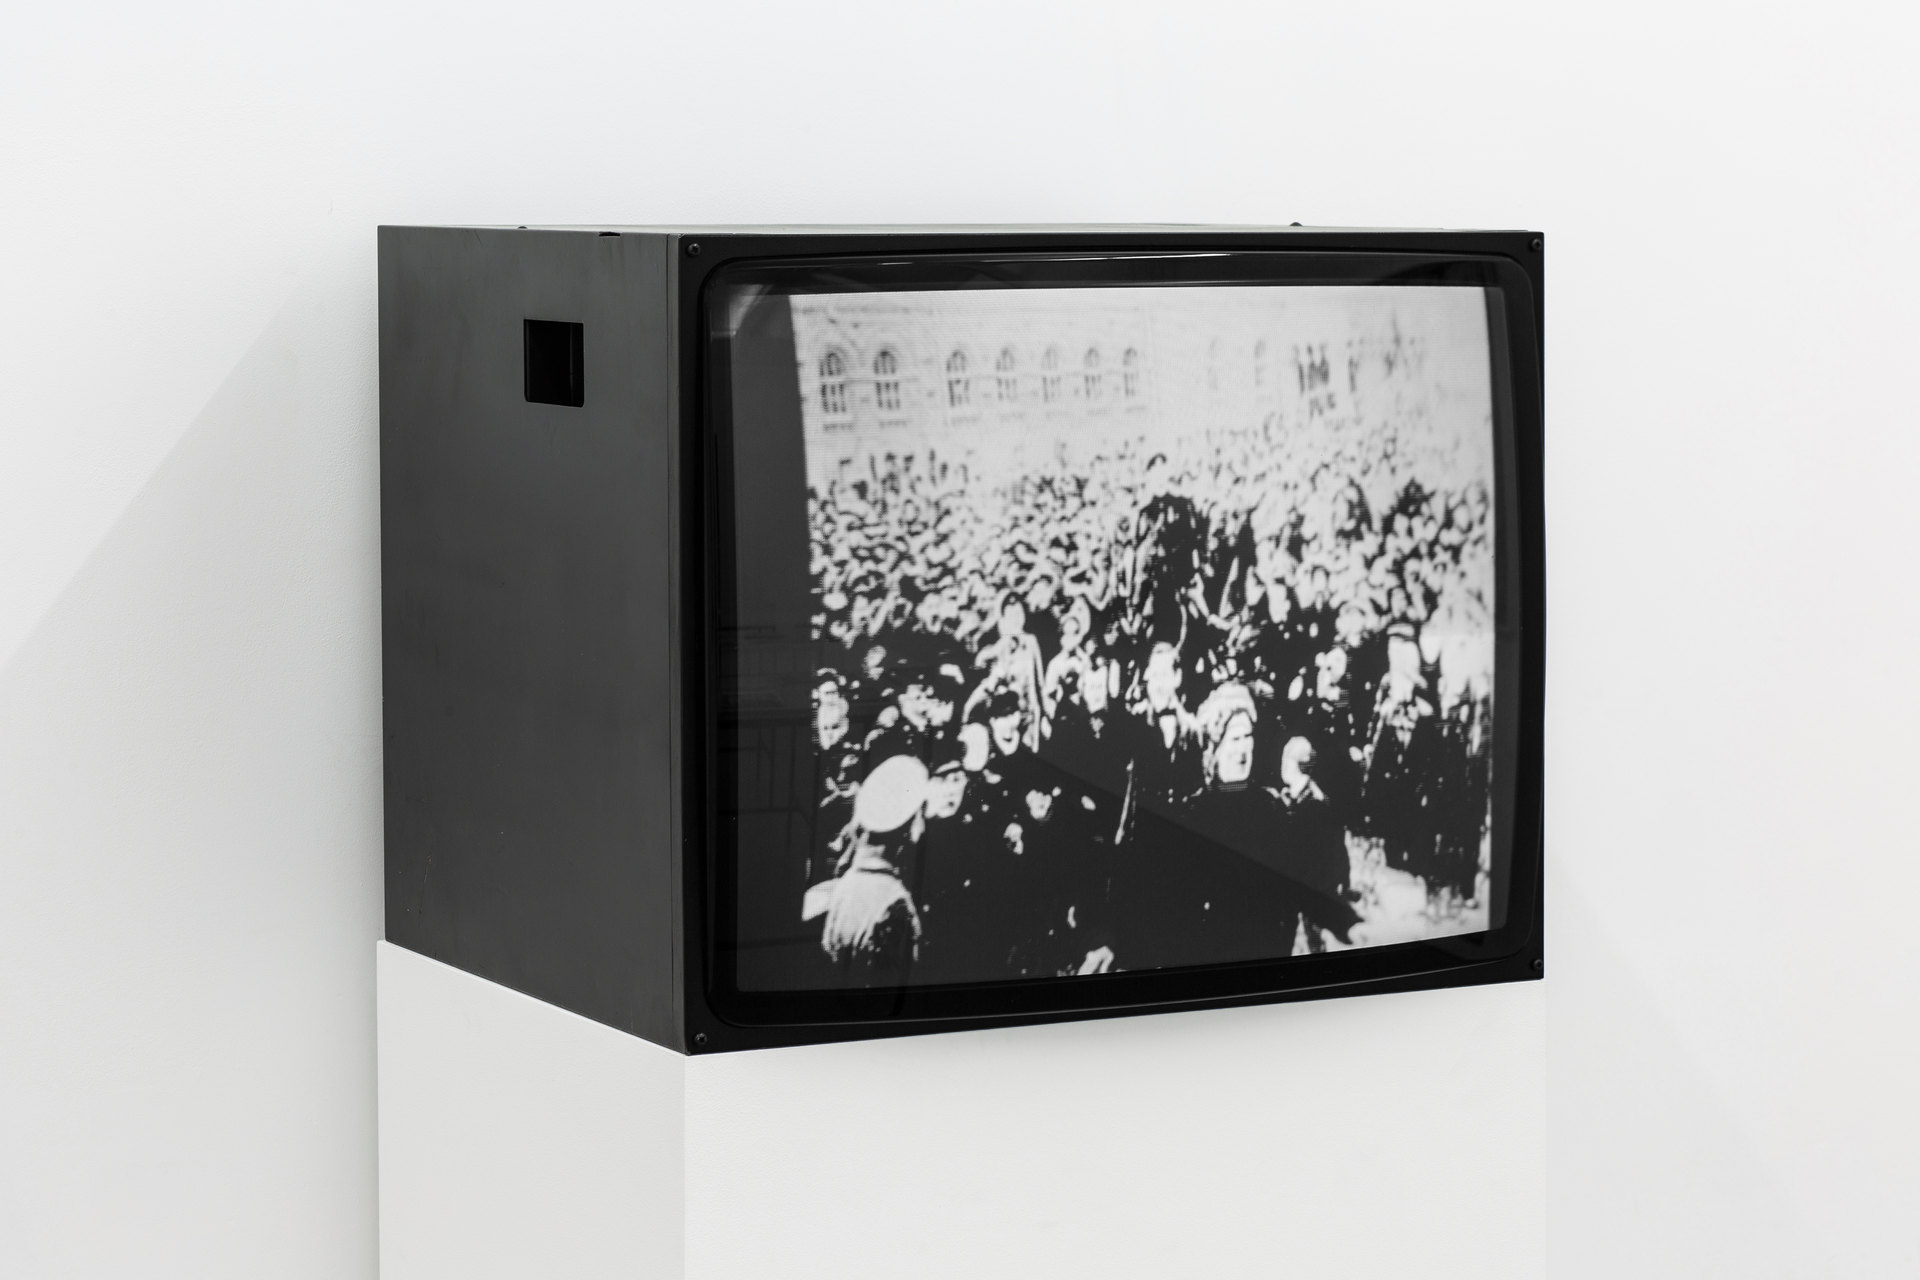 Aldo Tambellini, 'BLACK TRIP 2', 1967, Video [16mm, black & white, sound] 00:03:02, Shit and Doom - NO!art, 2019, Cell Project Space